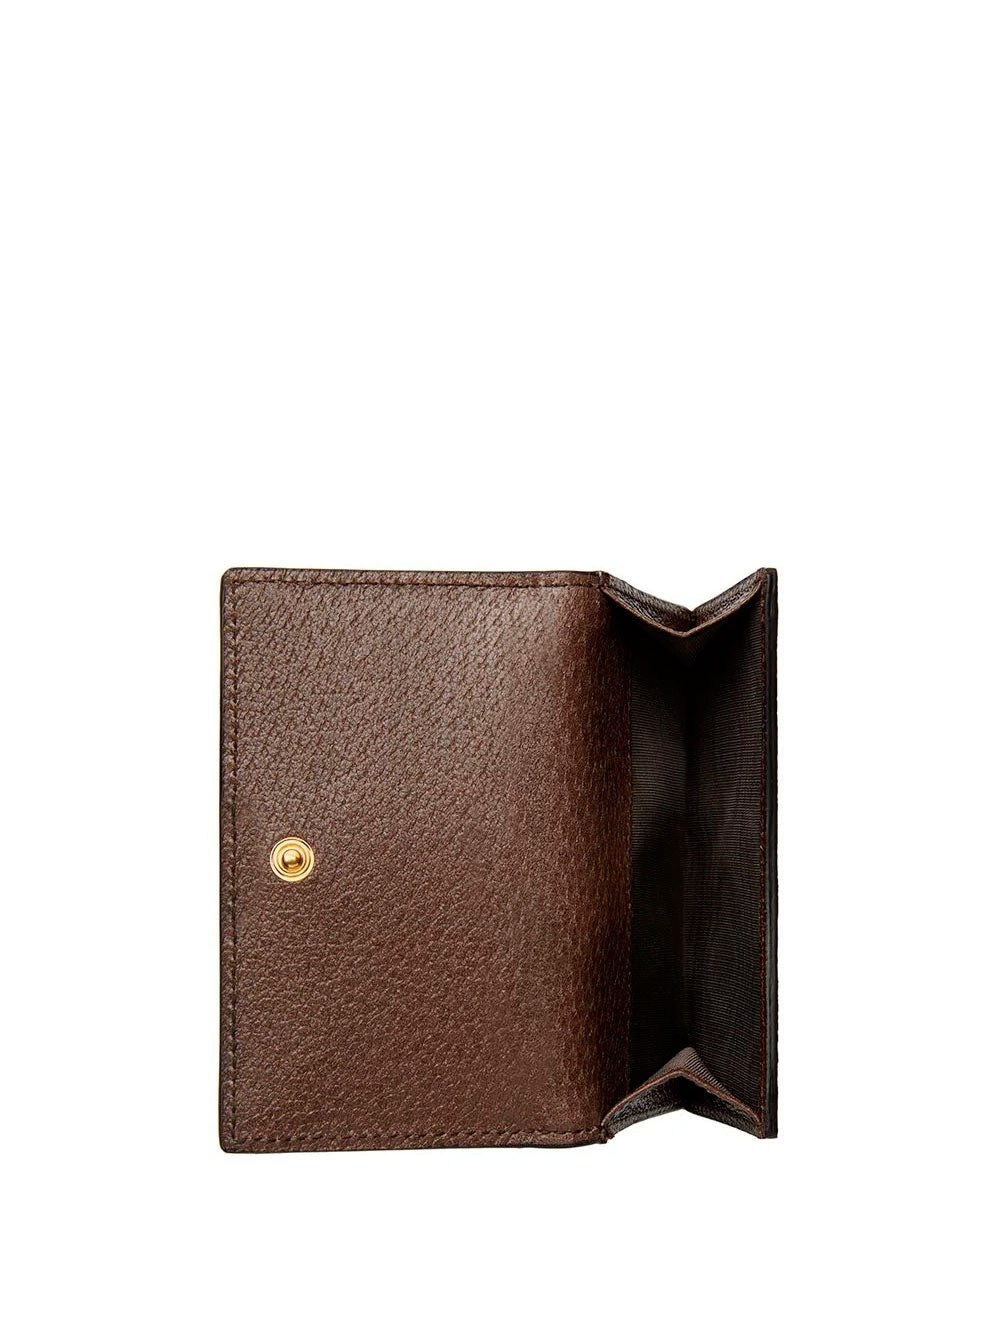 Ophidia flap wallet